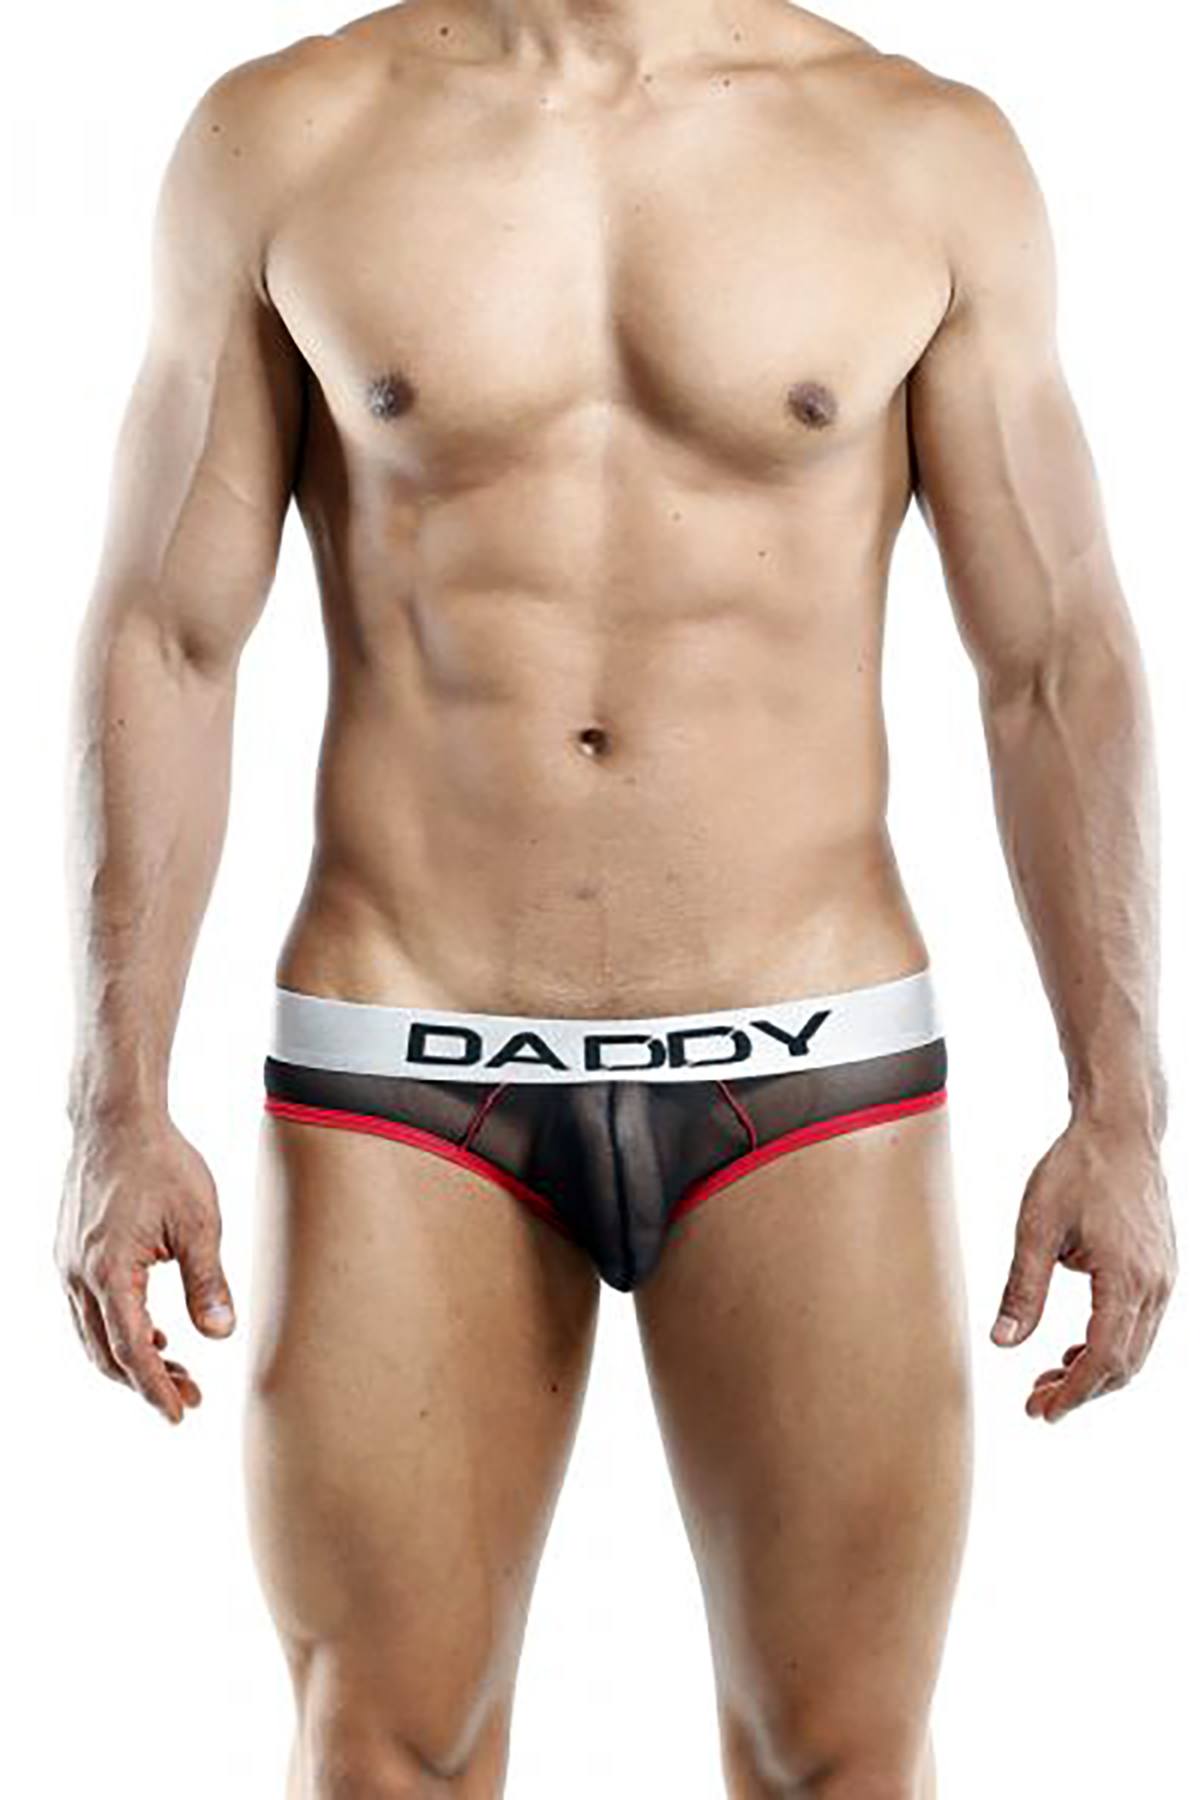 Daddy Sheer Front Bikini Brief in Black/Red